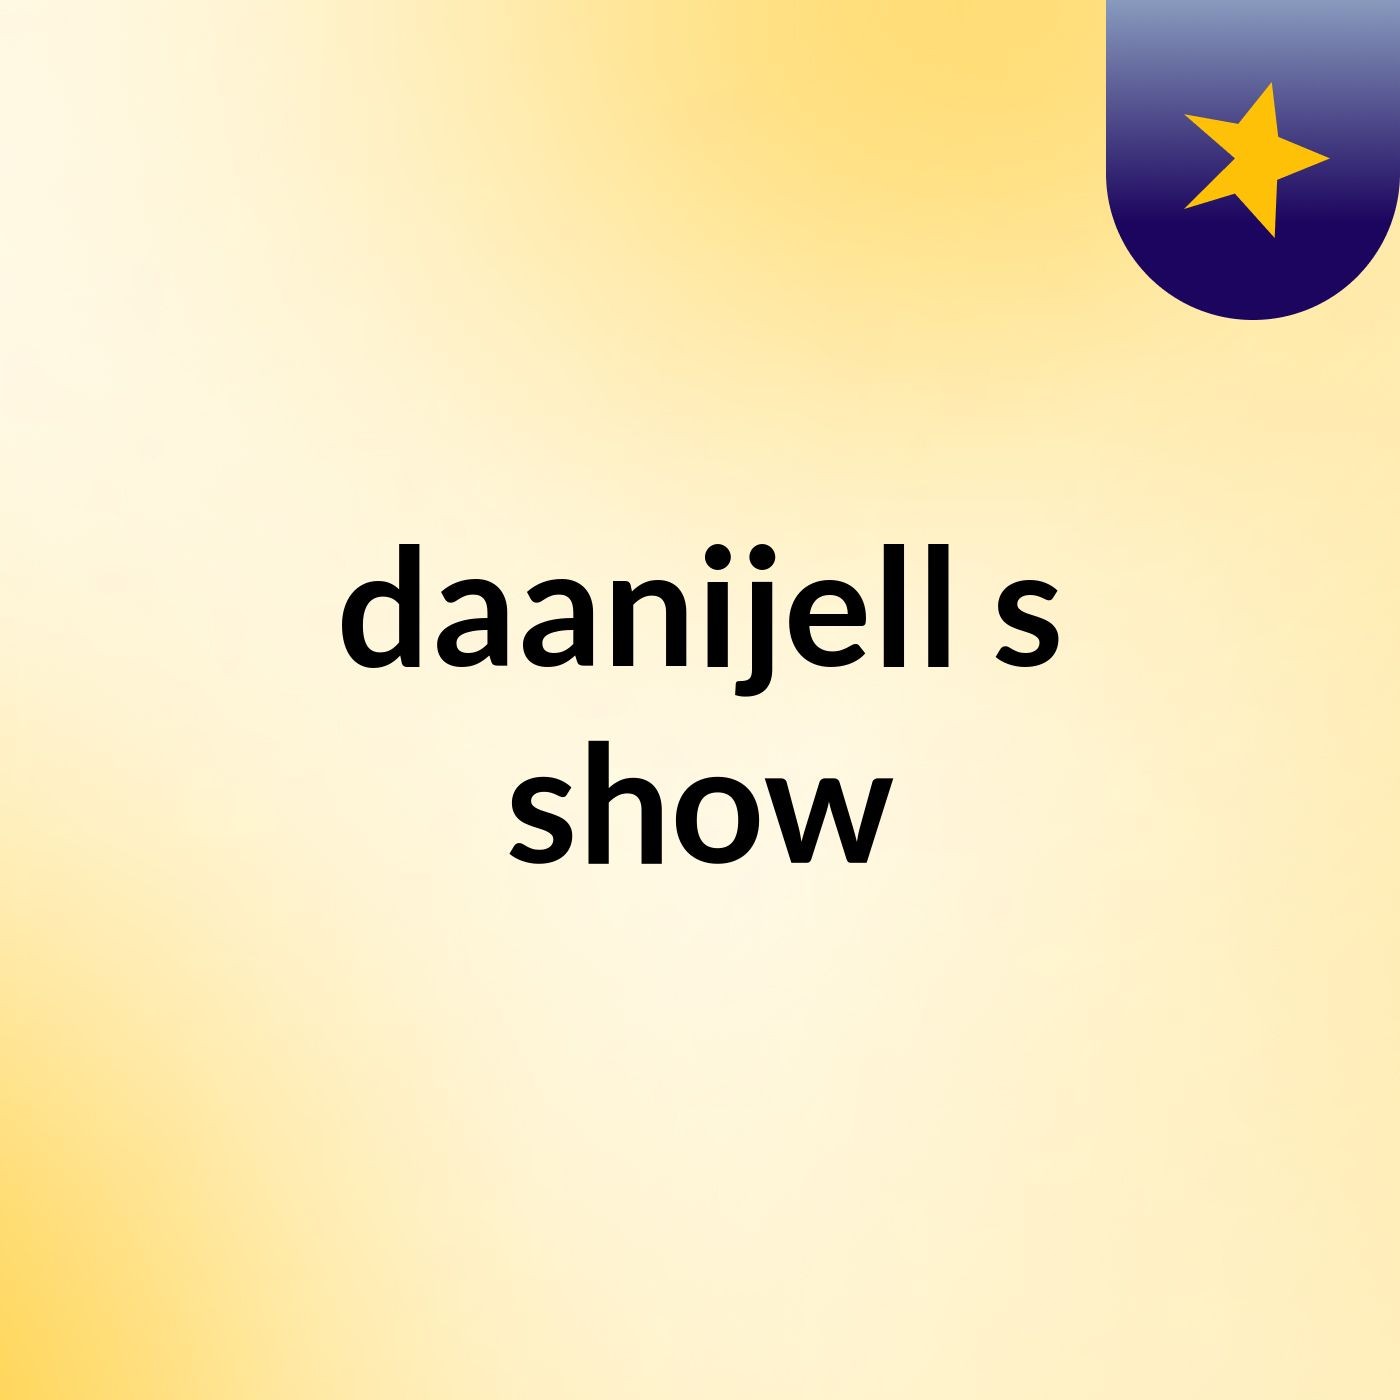 daanijell's show